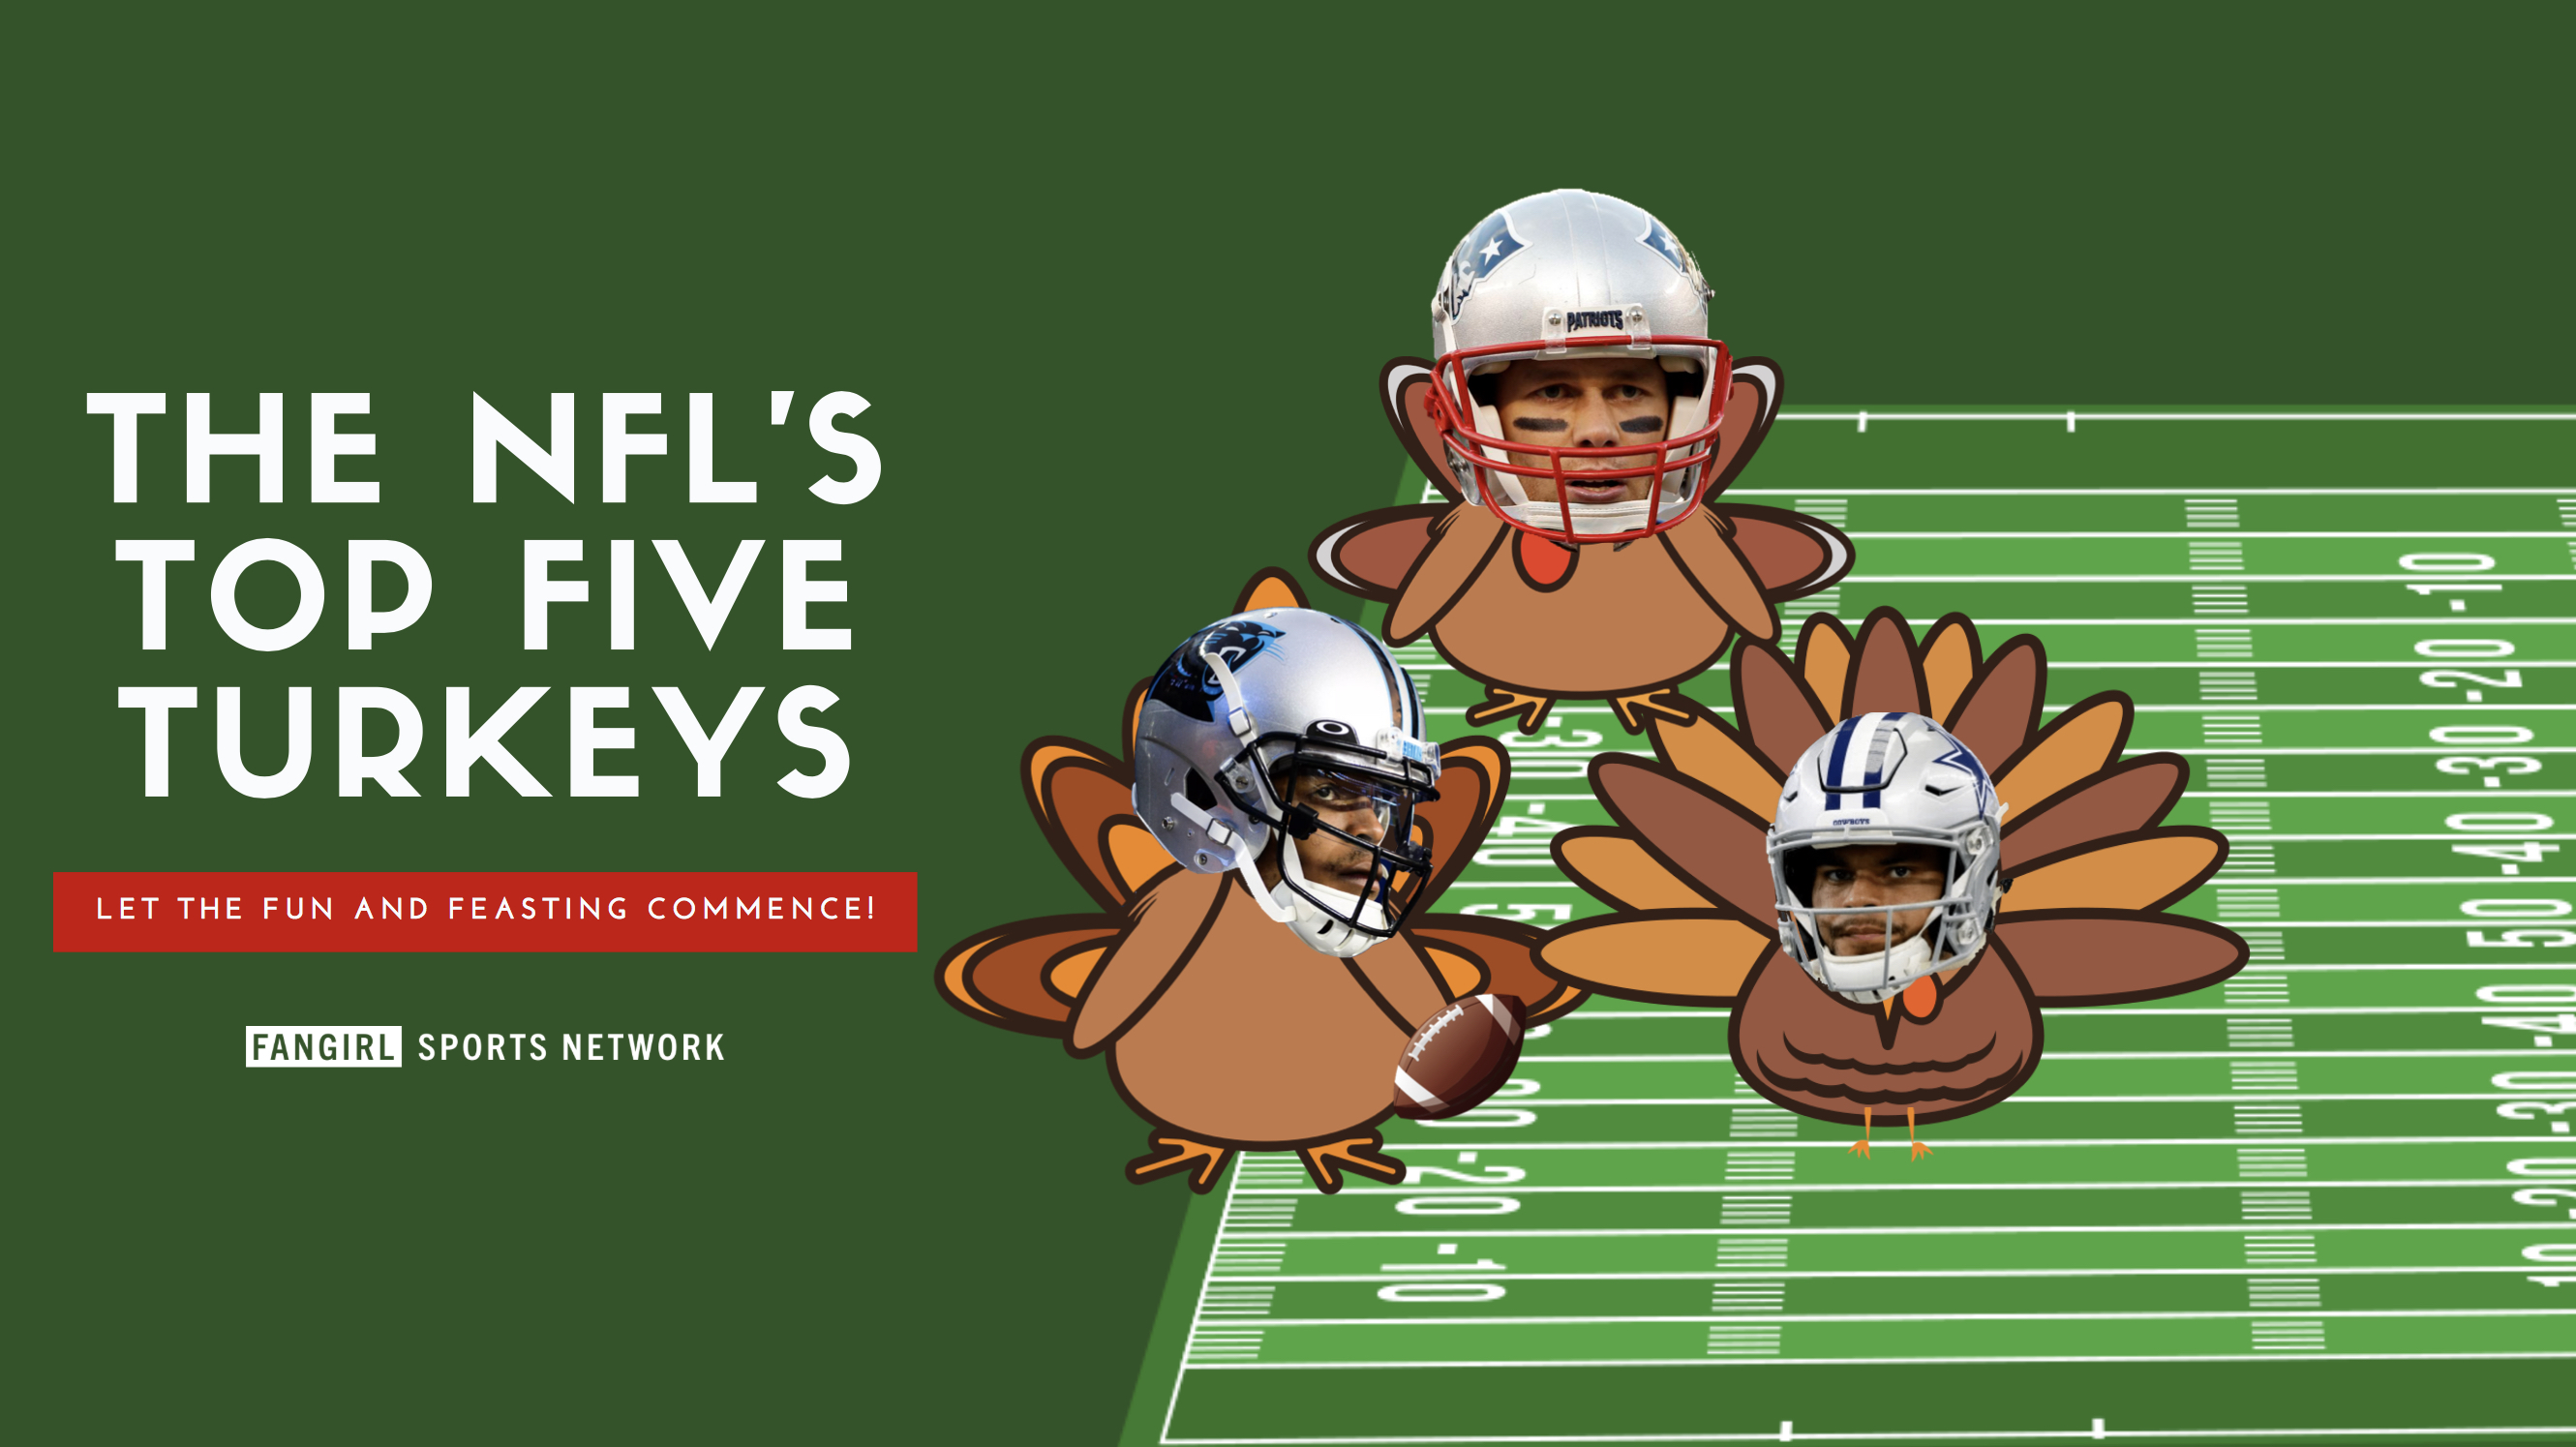 The NFL's Top 5 Turkeys Fangirl Sports Network